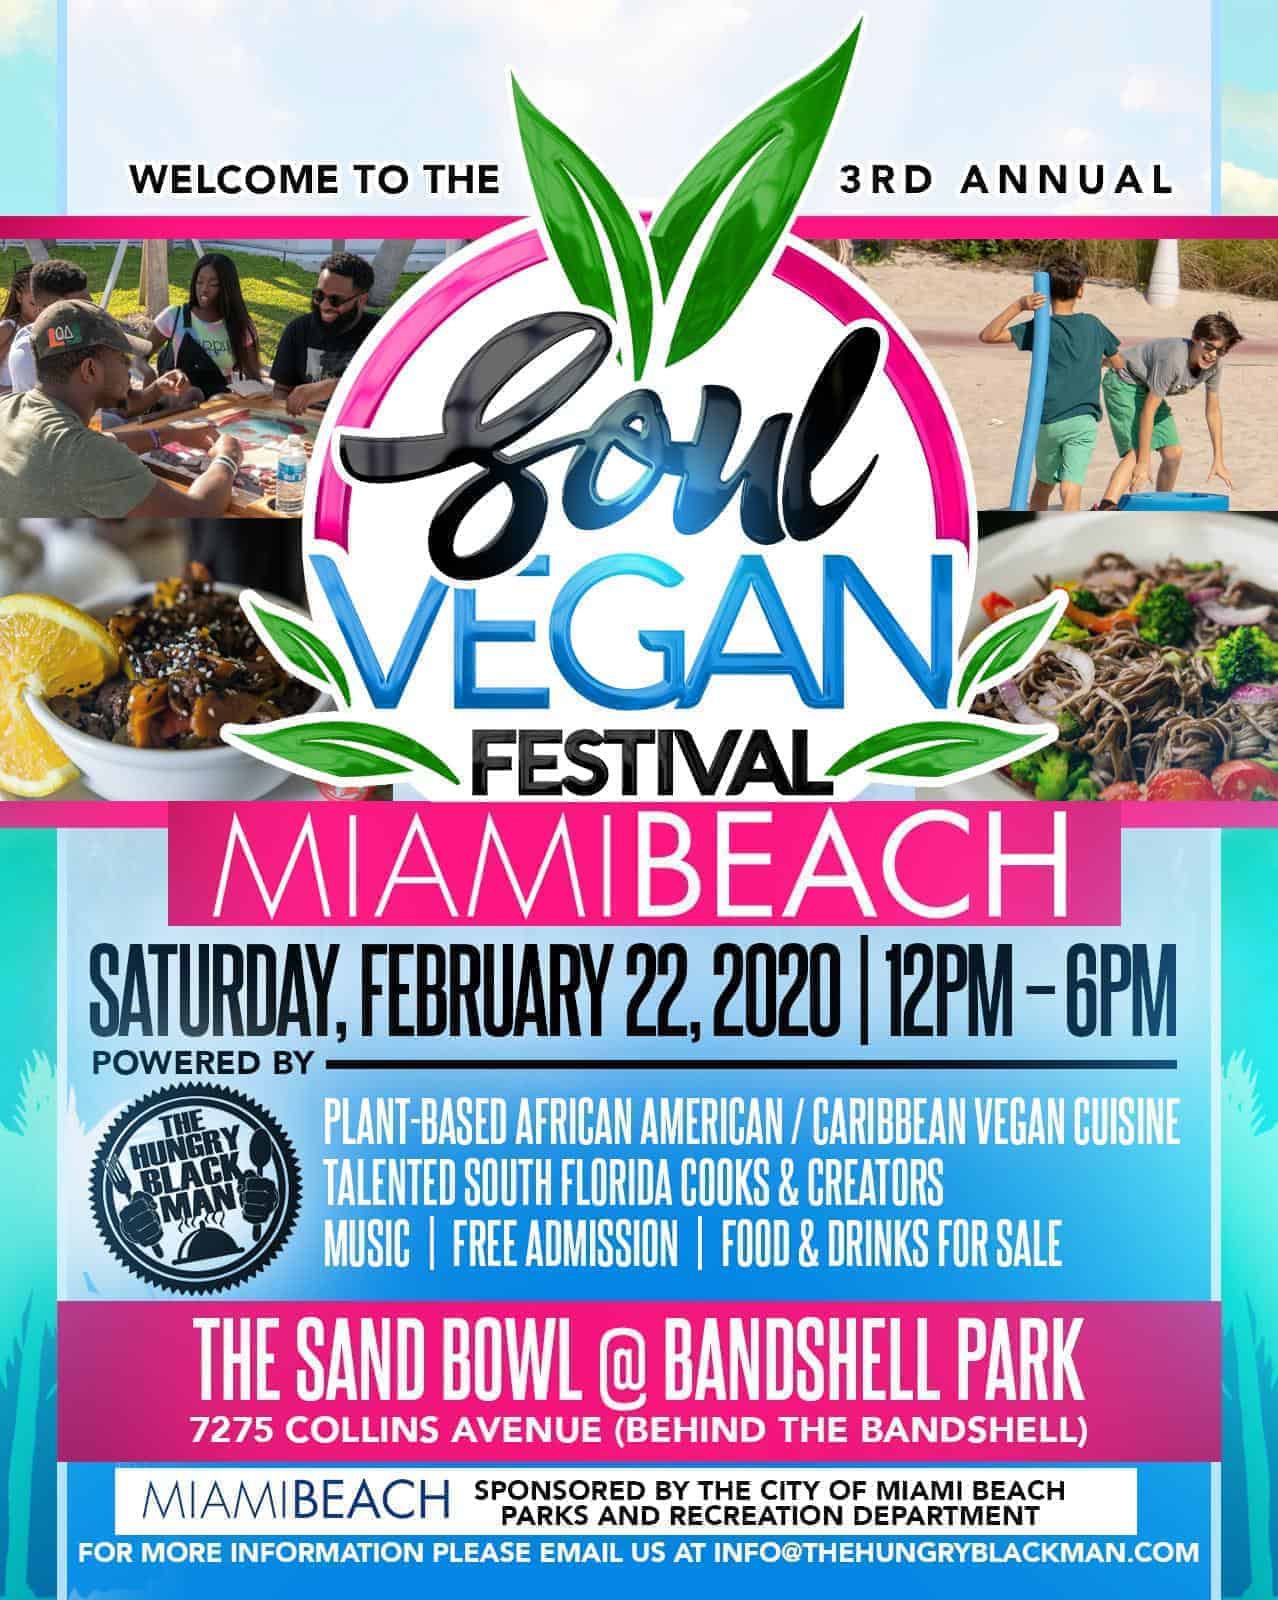 3rd Annual Soul Vegan Festival The Kid On The Go